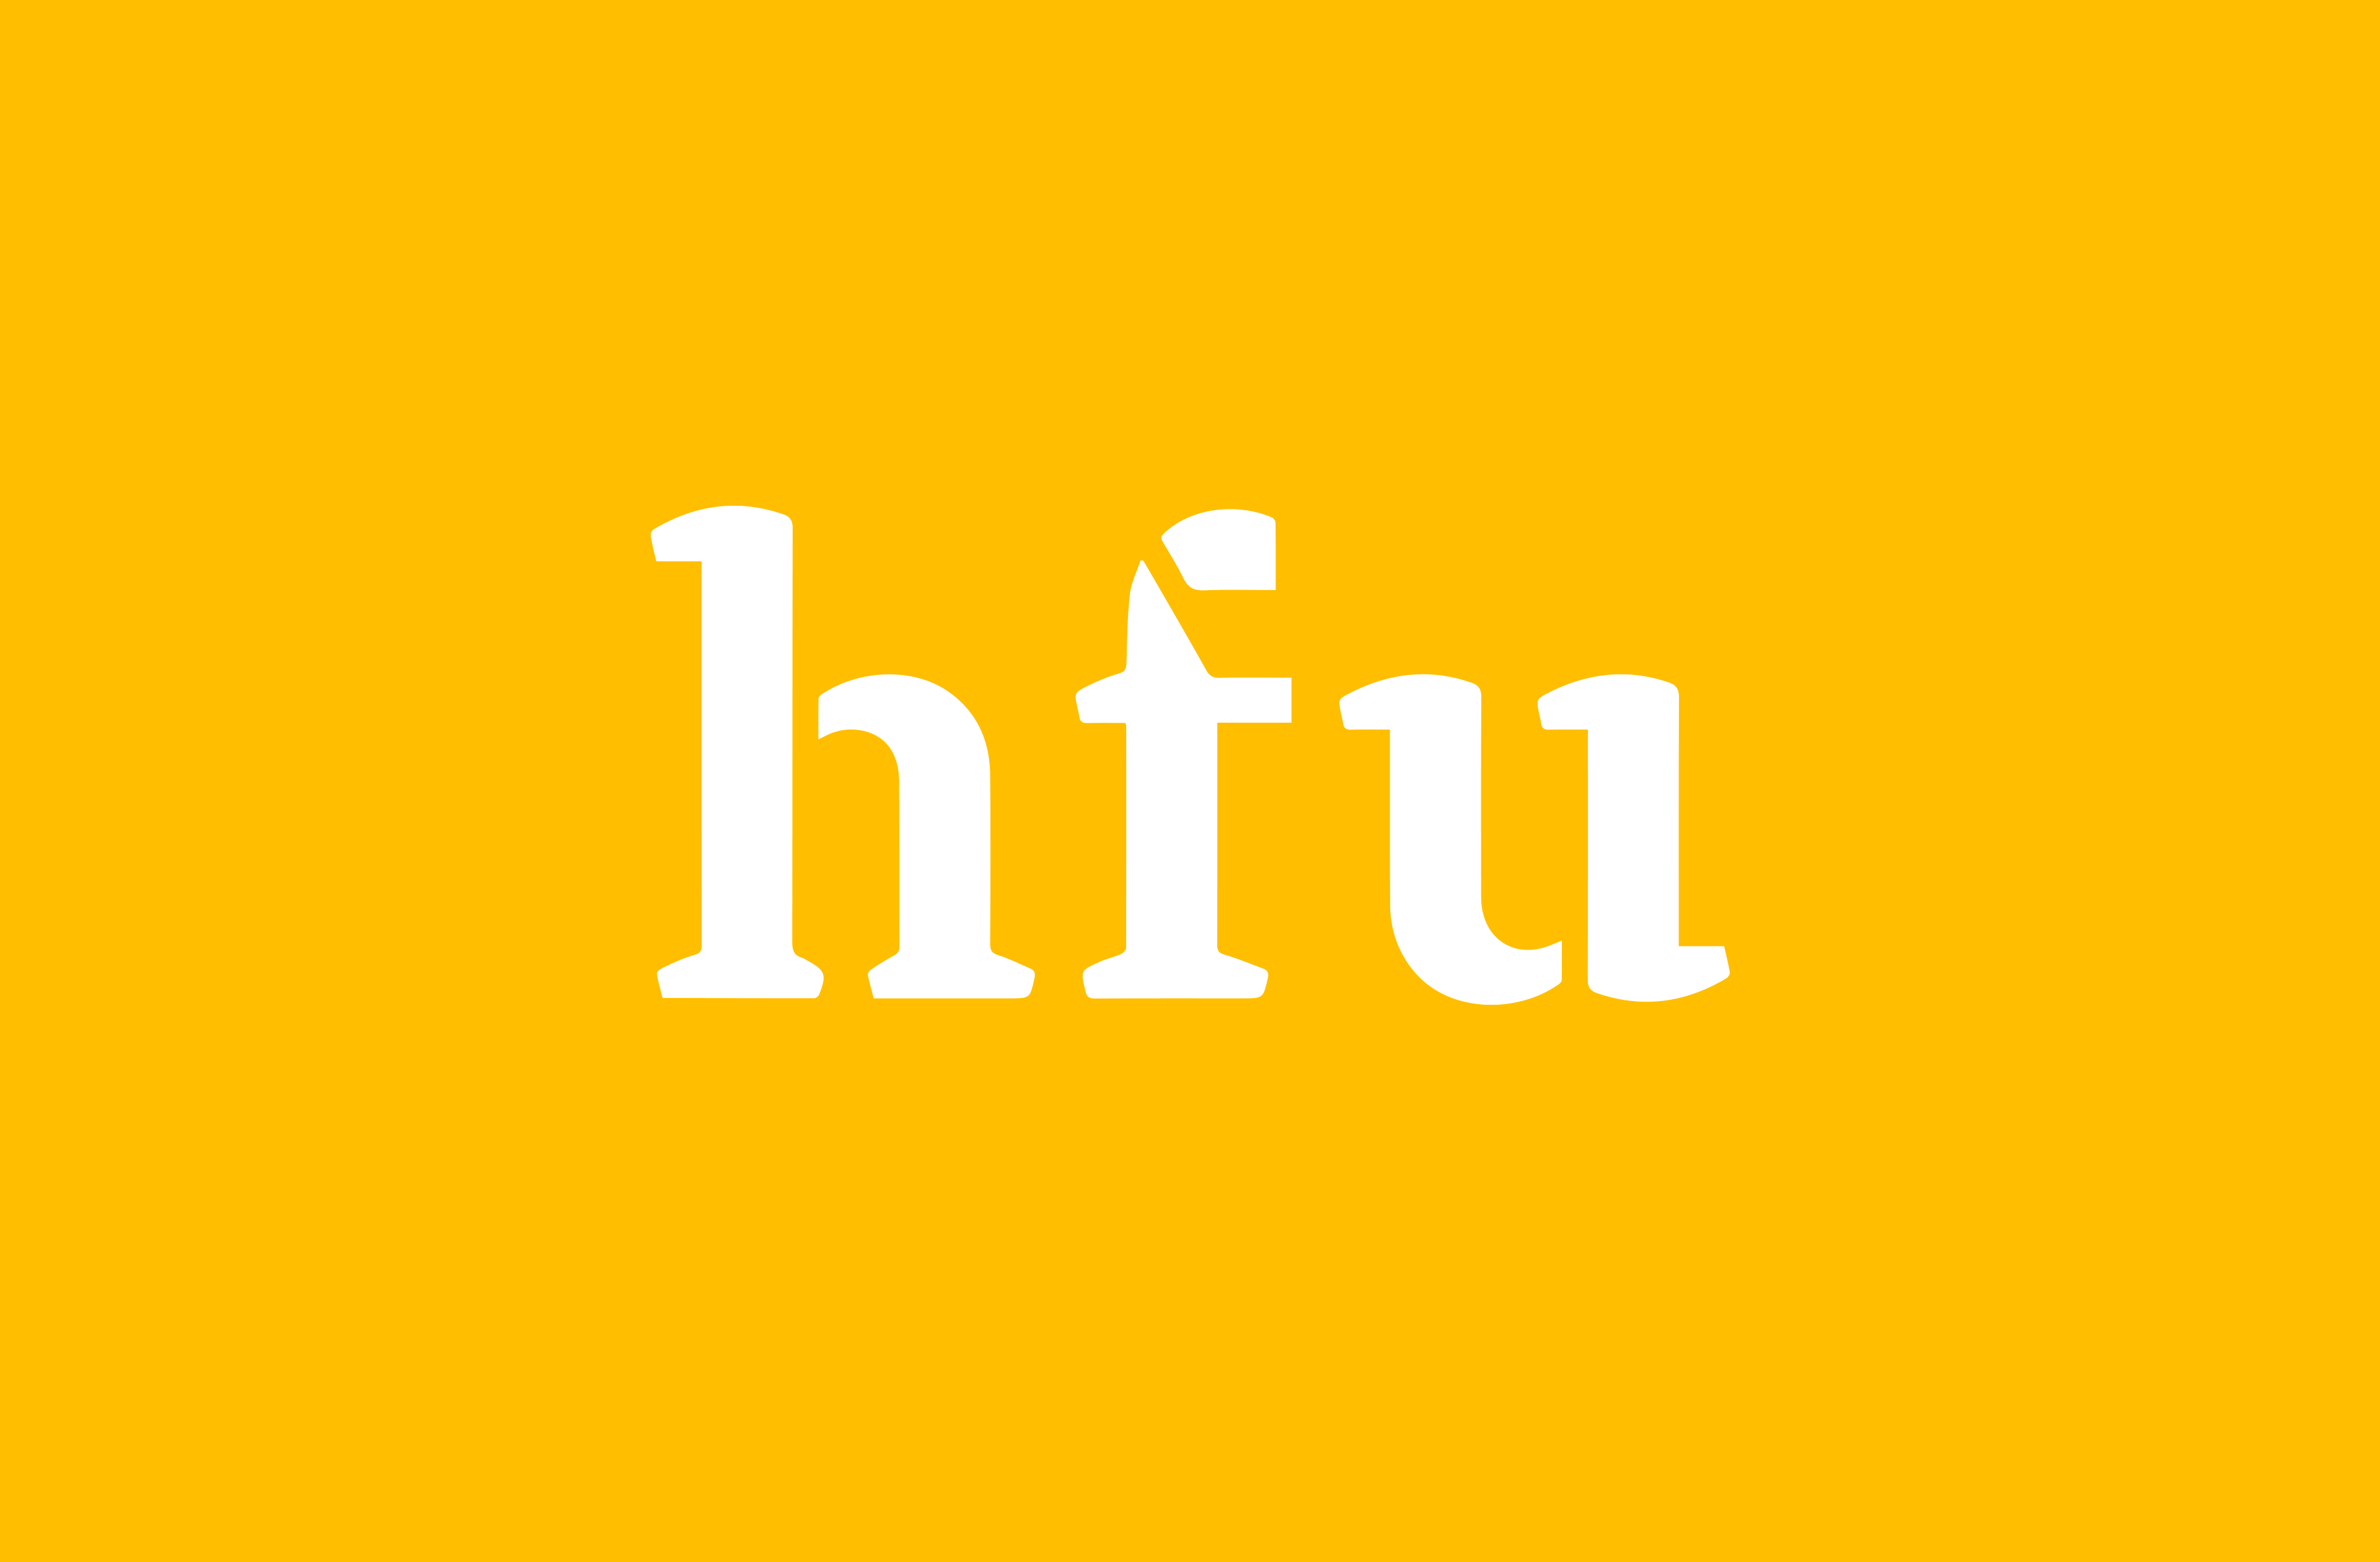 hfu - logo